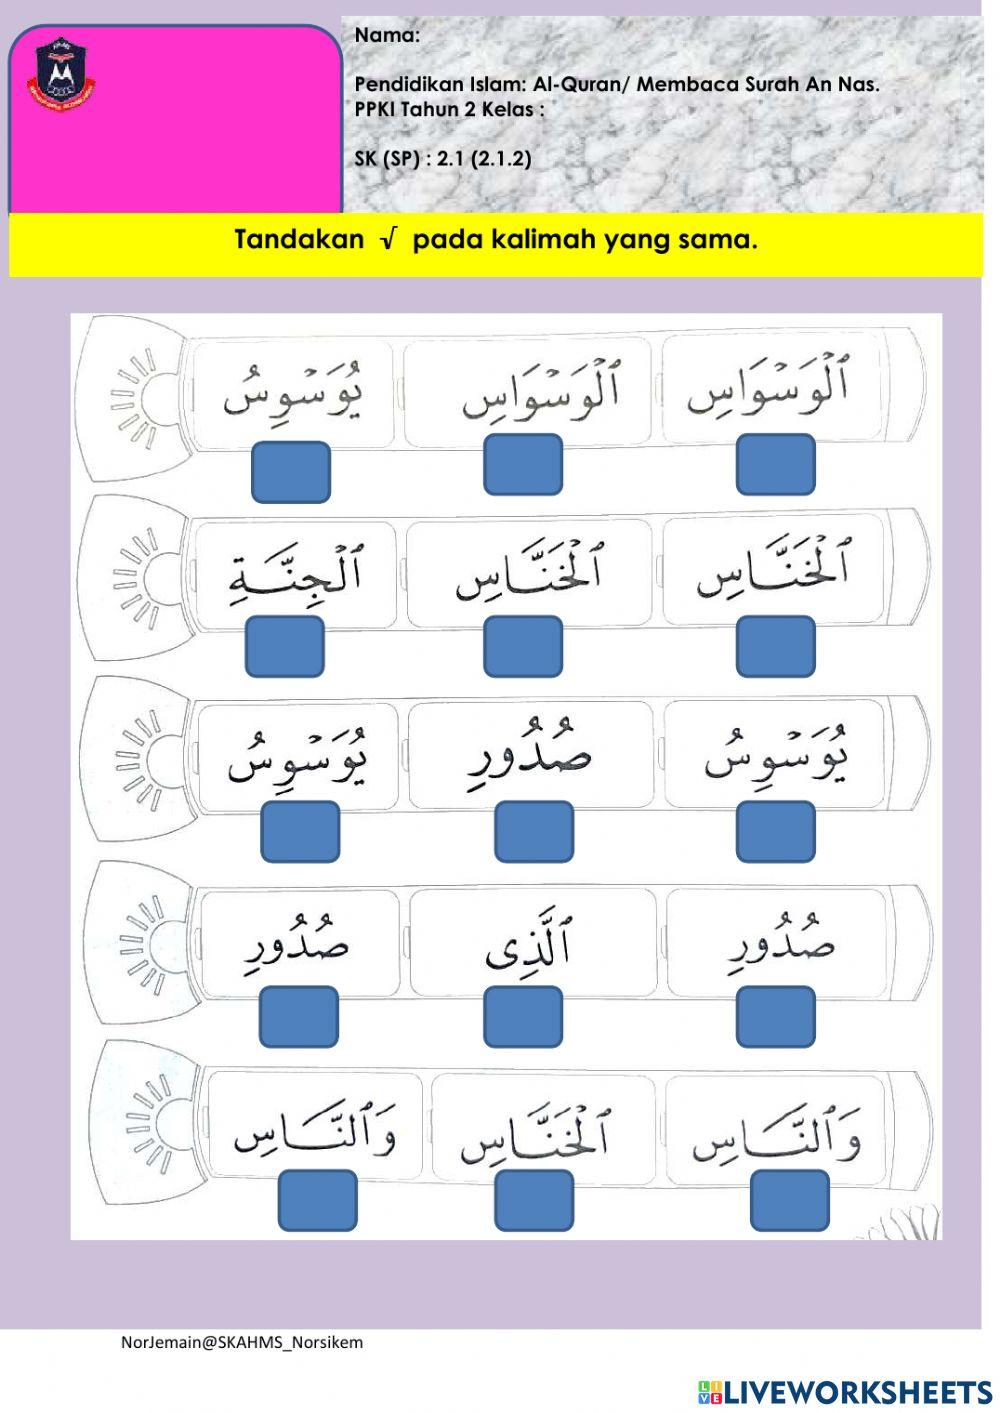 M28 membaca surah an nas (2.1.2) ppki thn 2